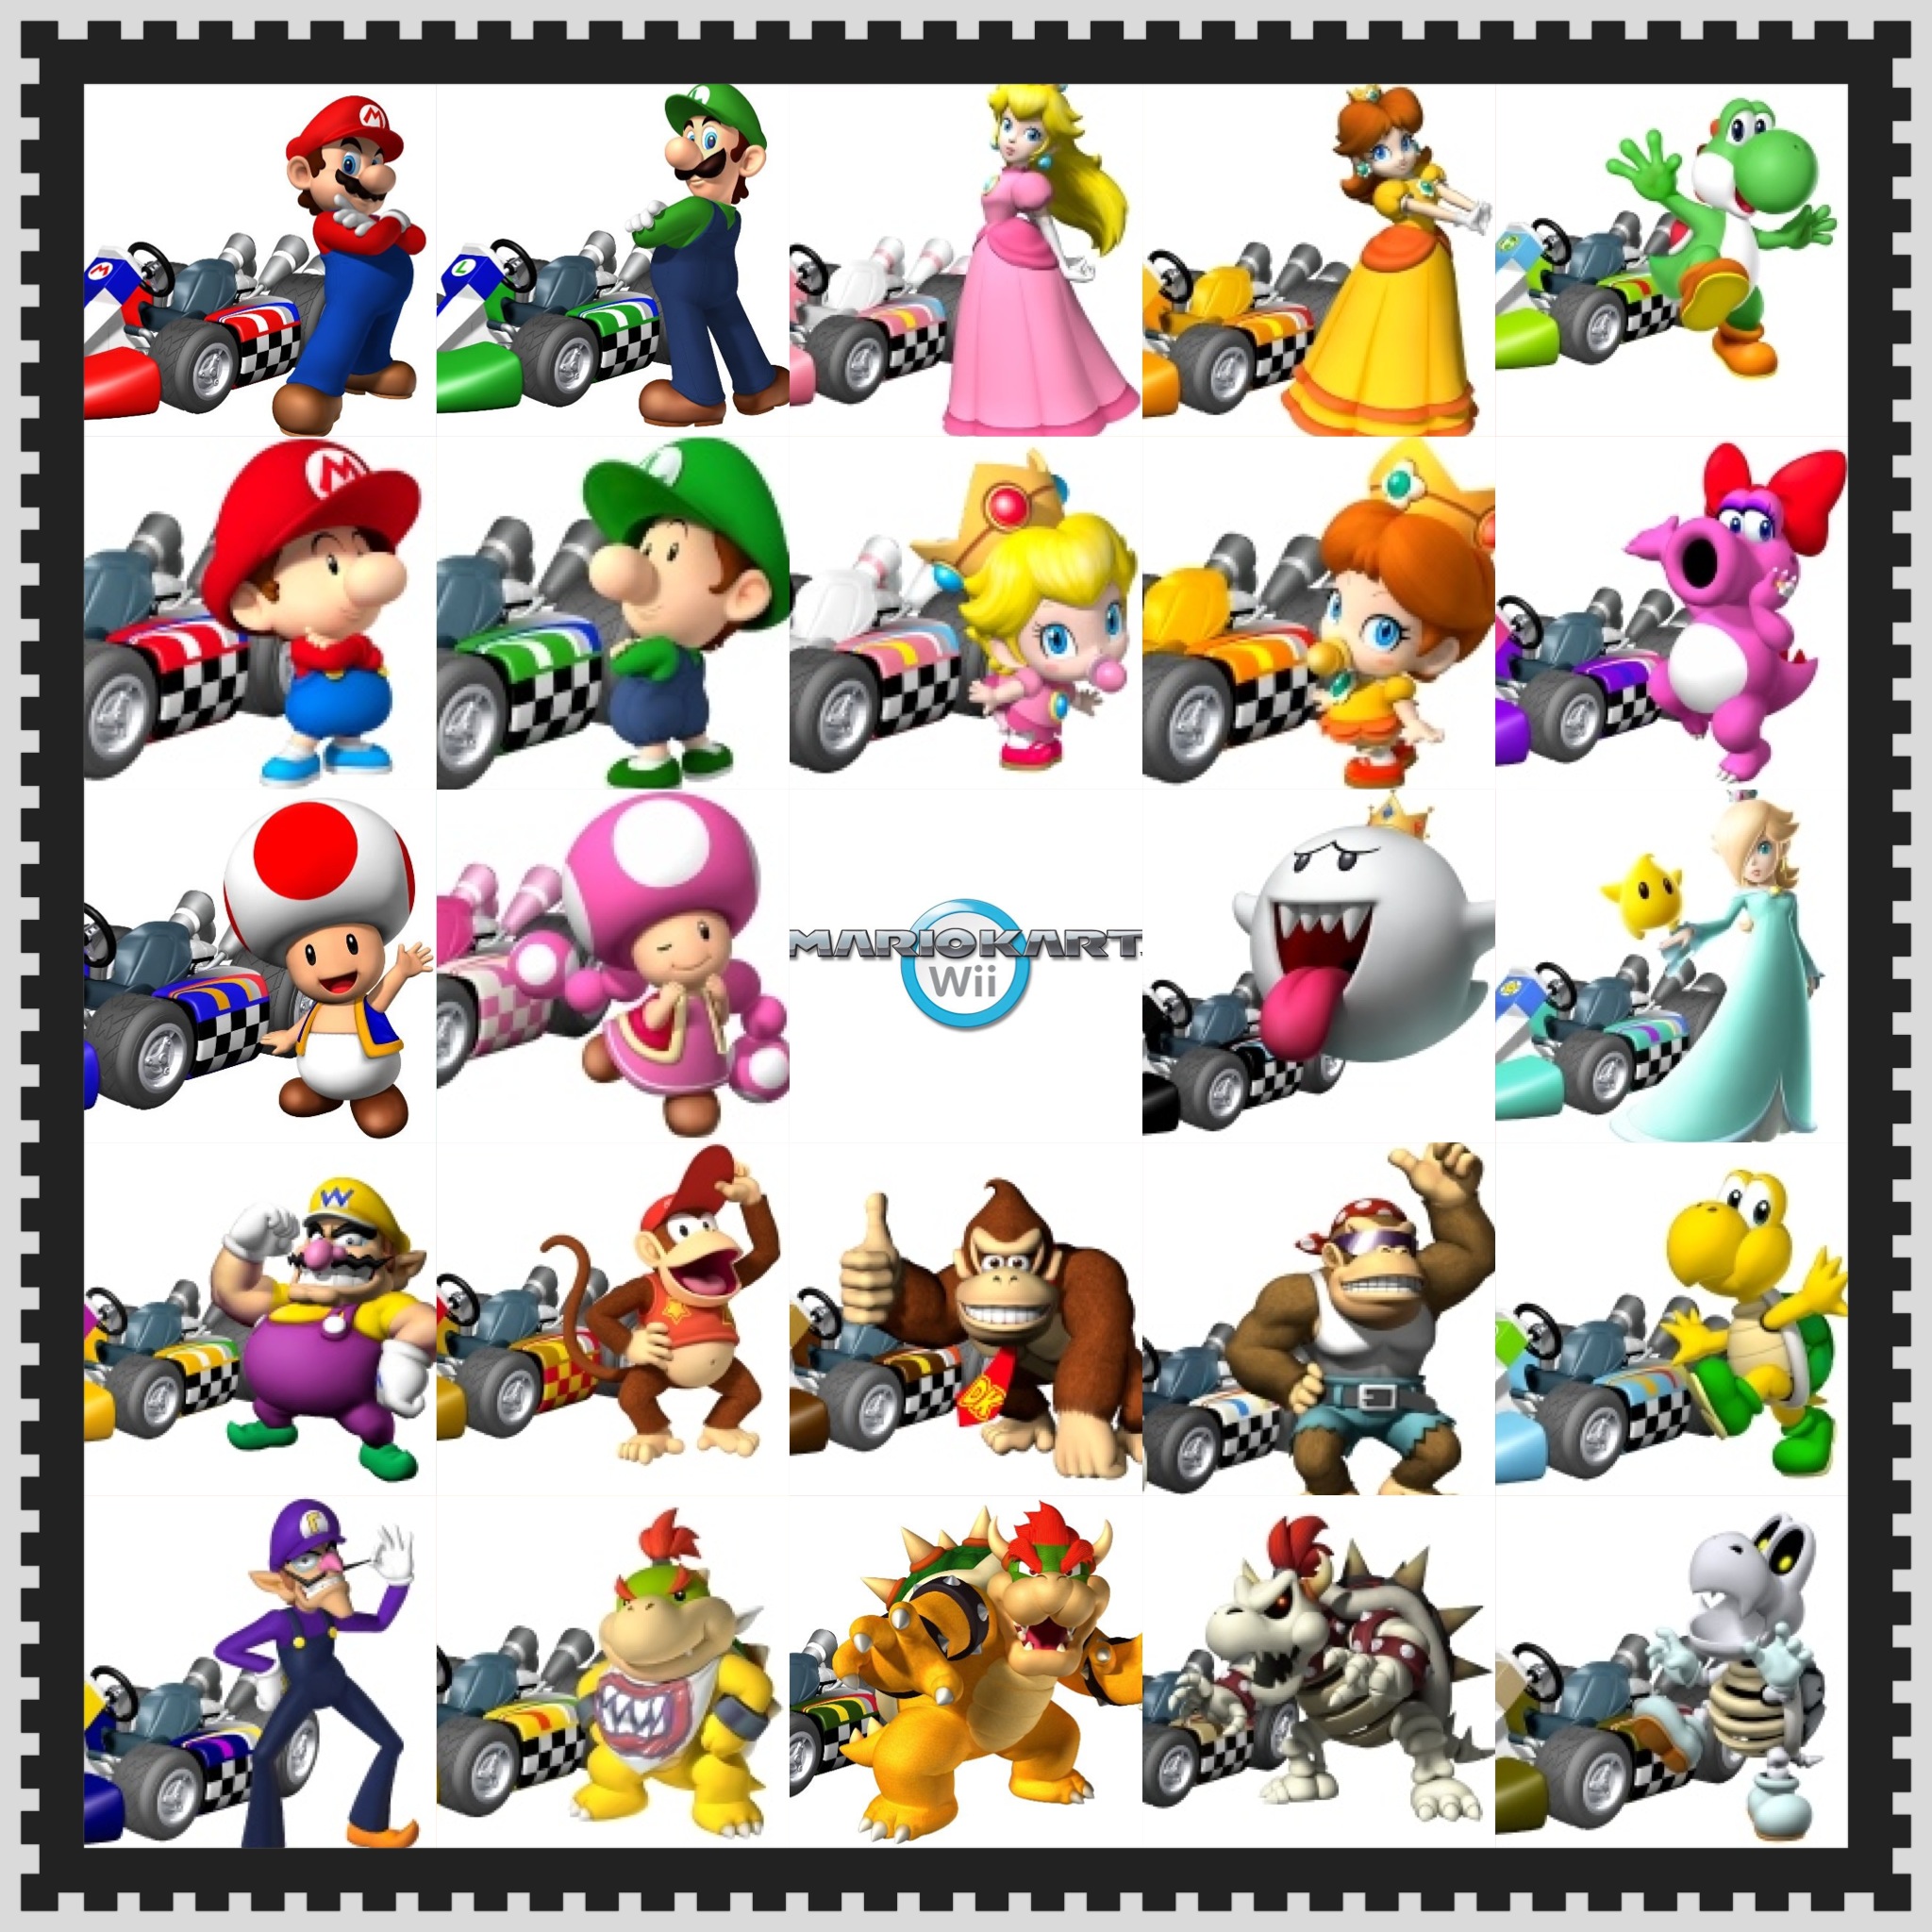 Peach Mario Kart Characters Mario Kart Wii Peach Wallpaper By